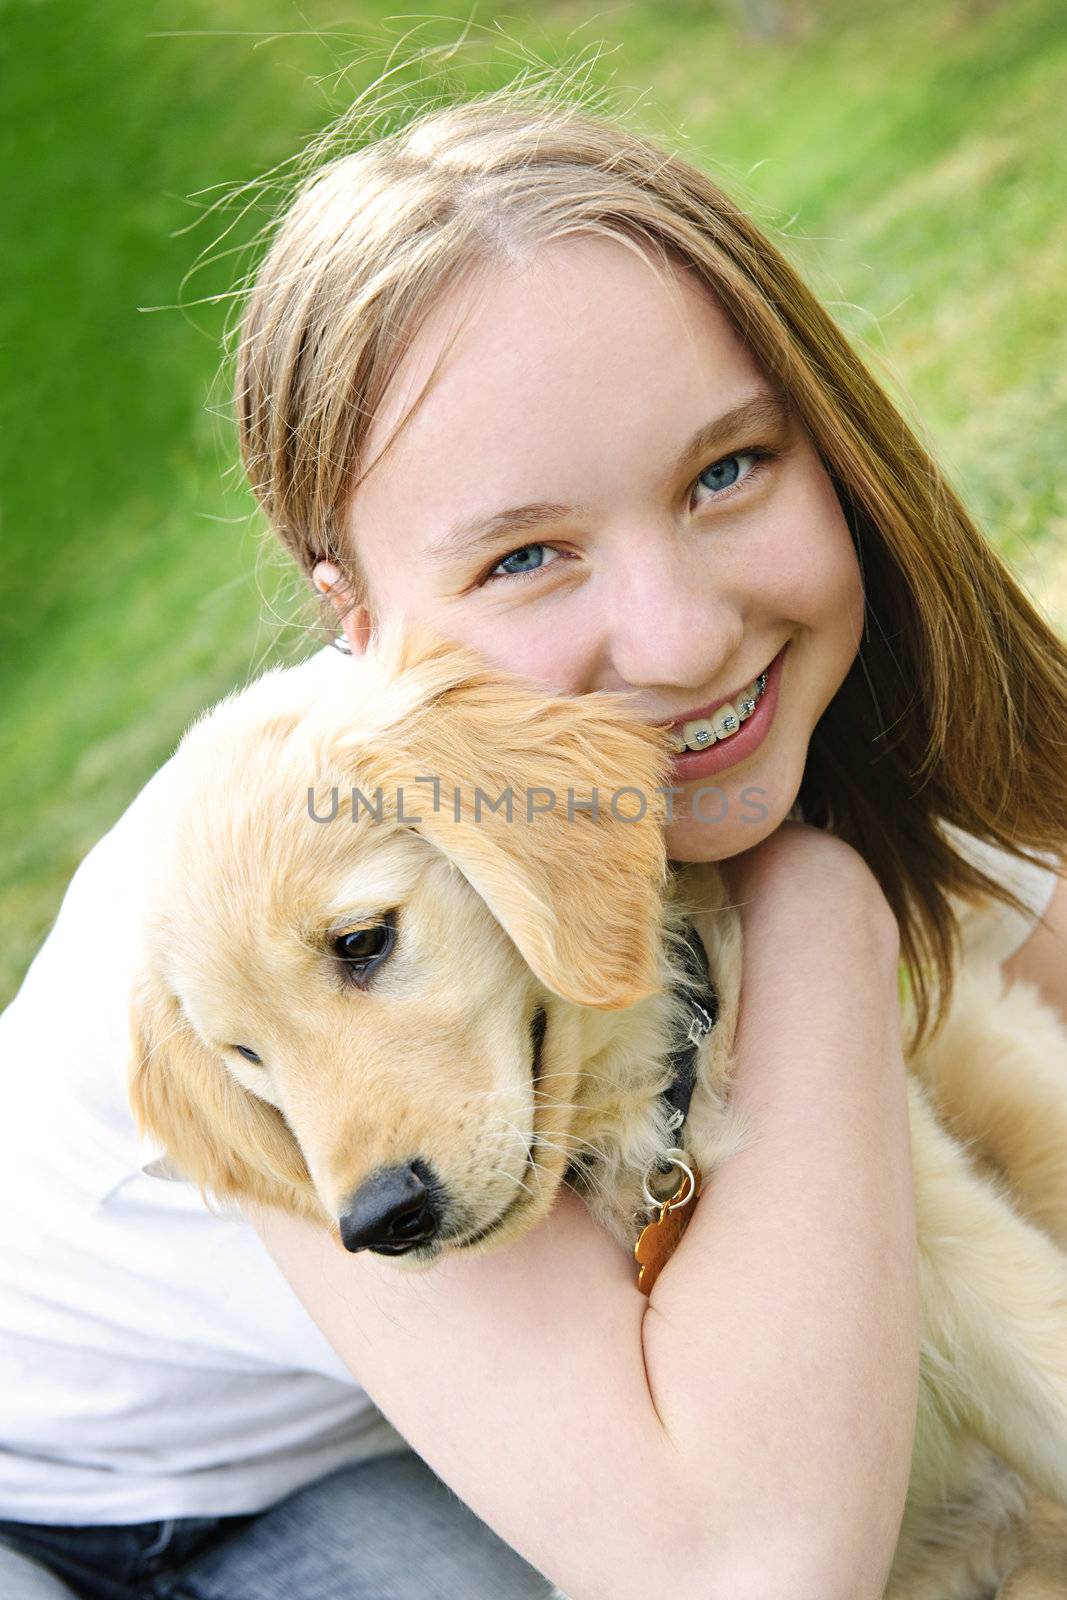 Portrait of smiling teenage girl holding golden retriever puppy